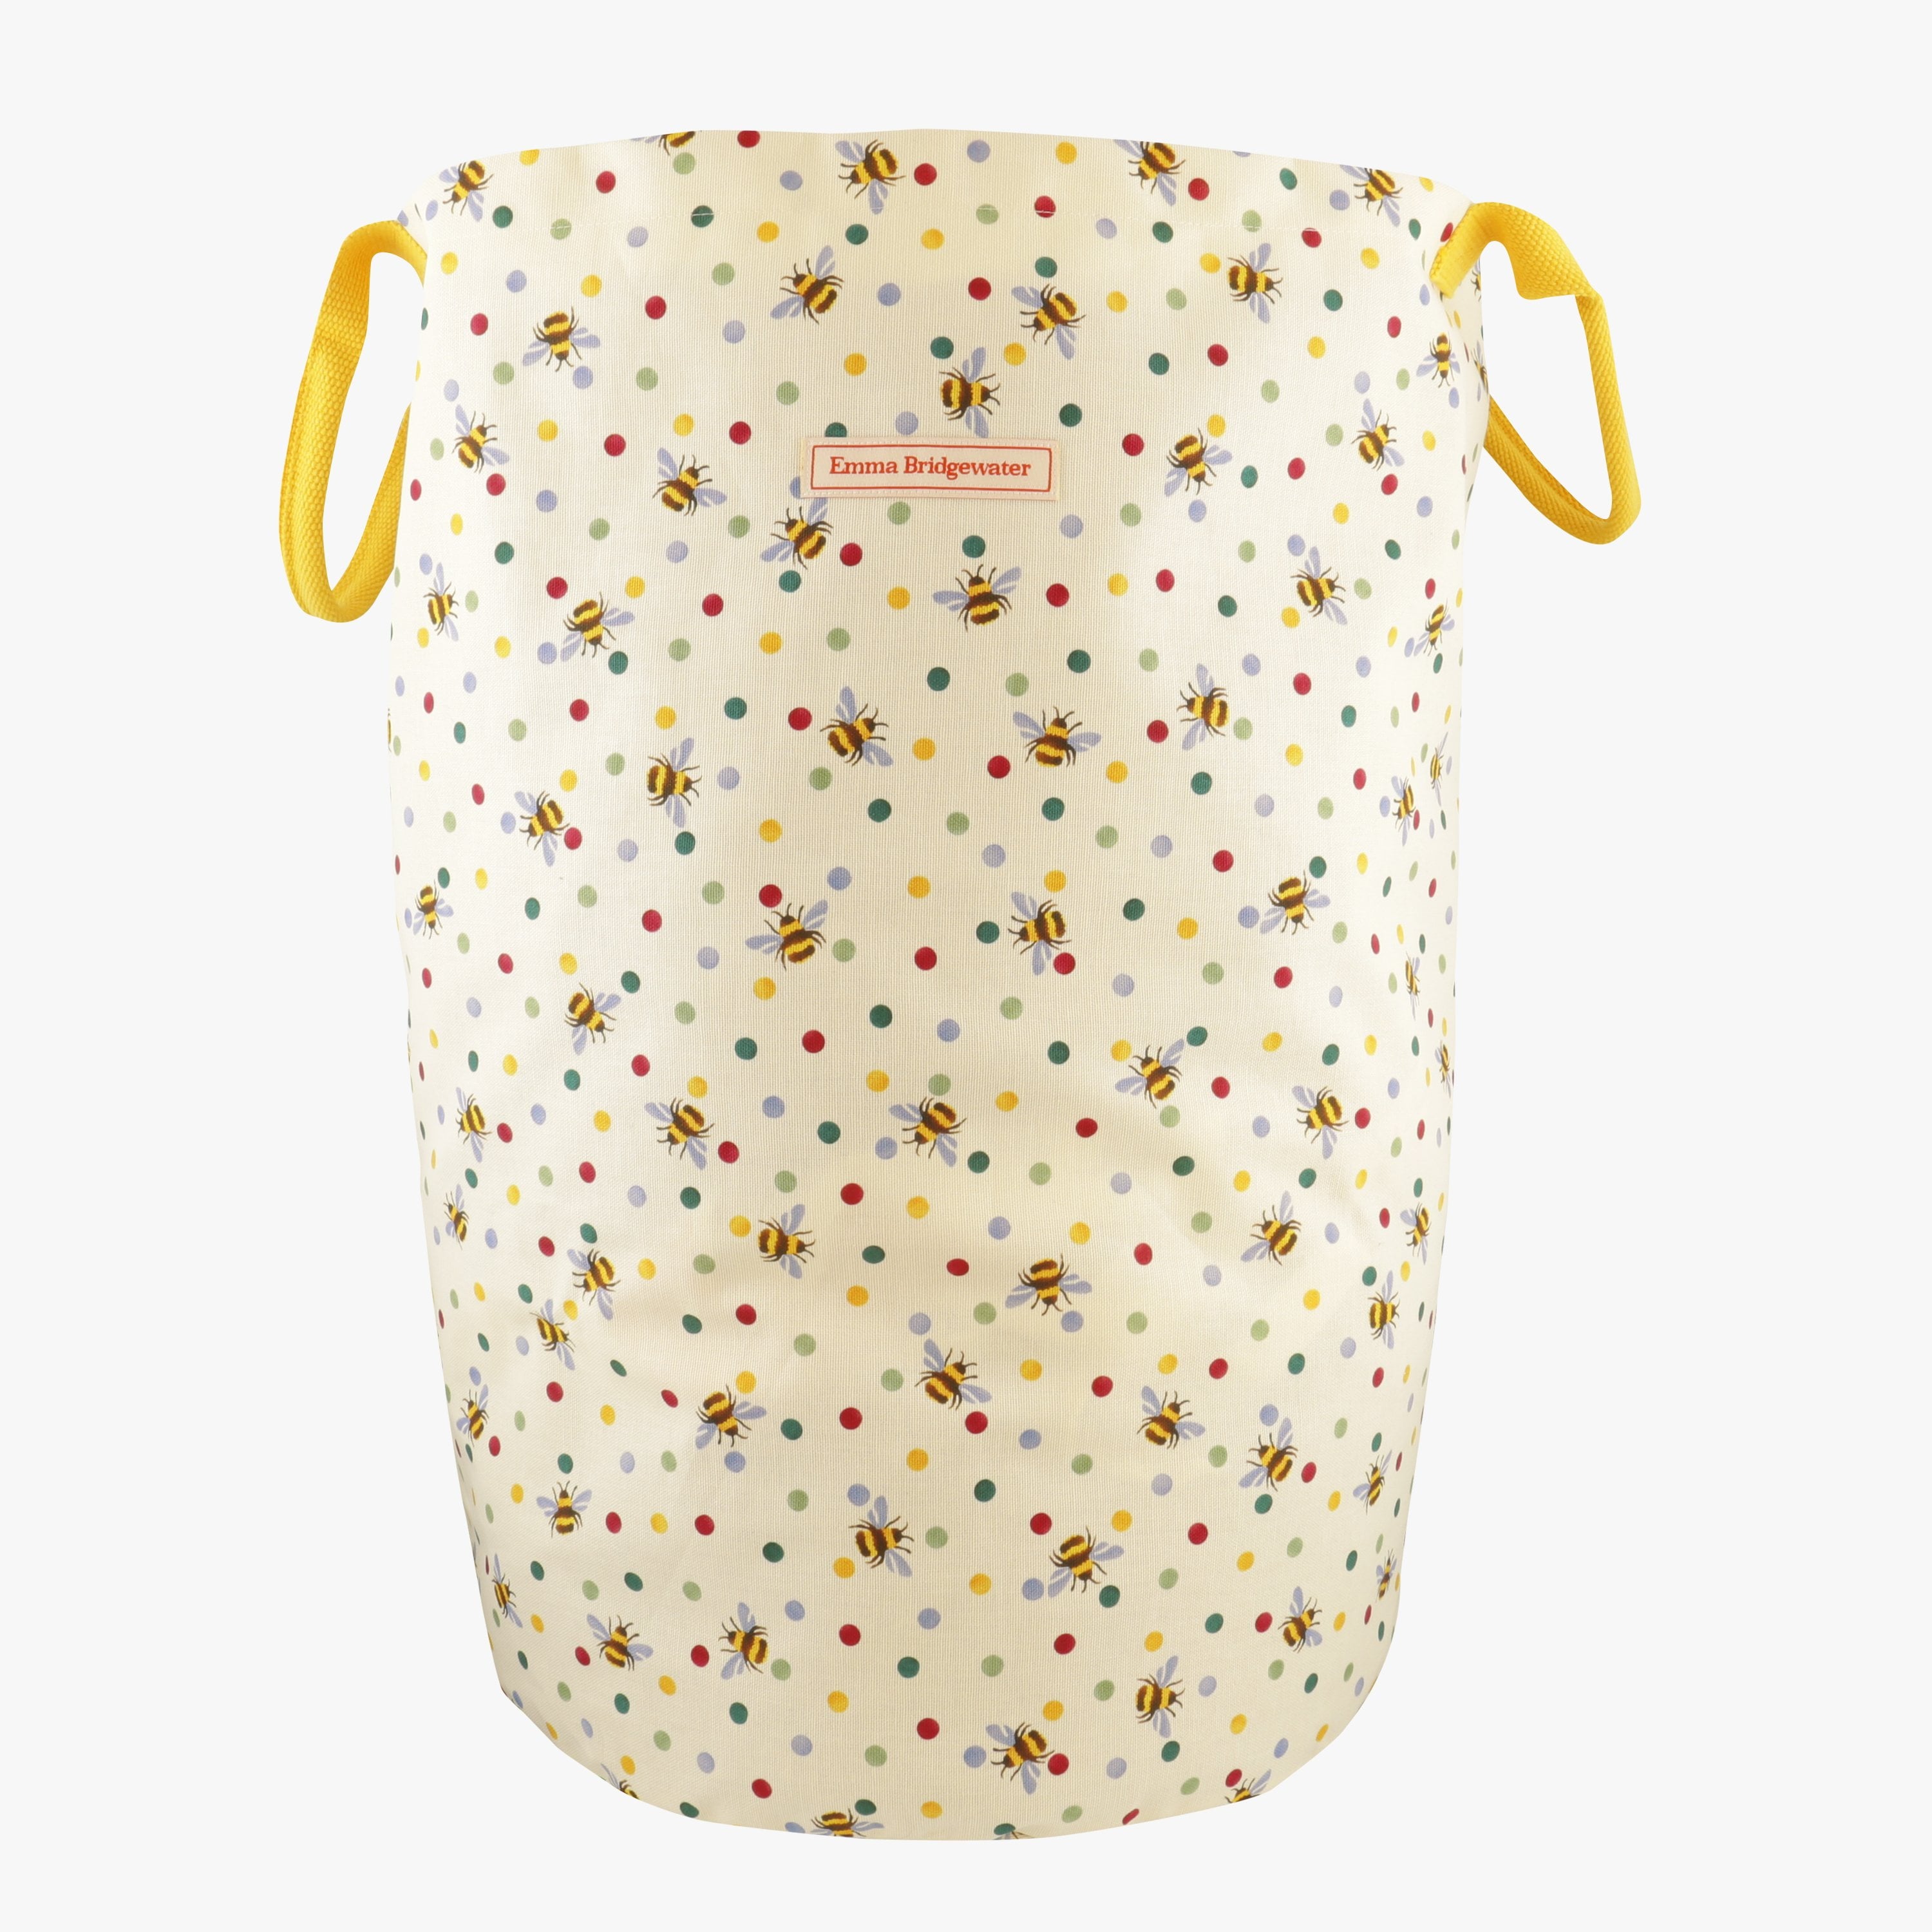 Emma Bridgewater |  Bumblebee & Small Polka Dot Large Drawstring Laundry Bag